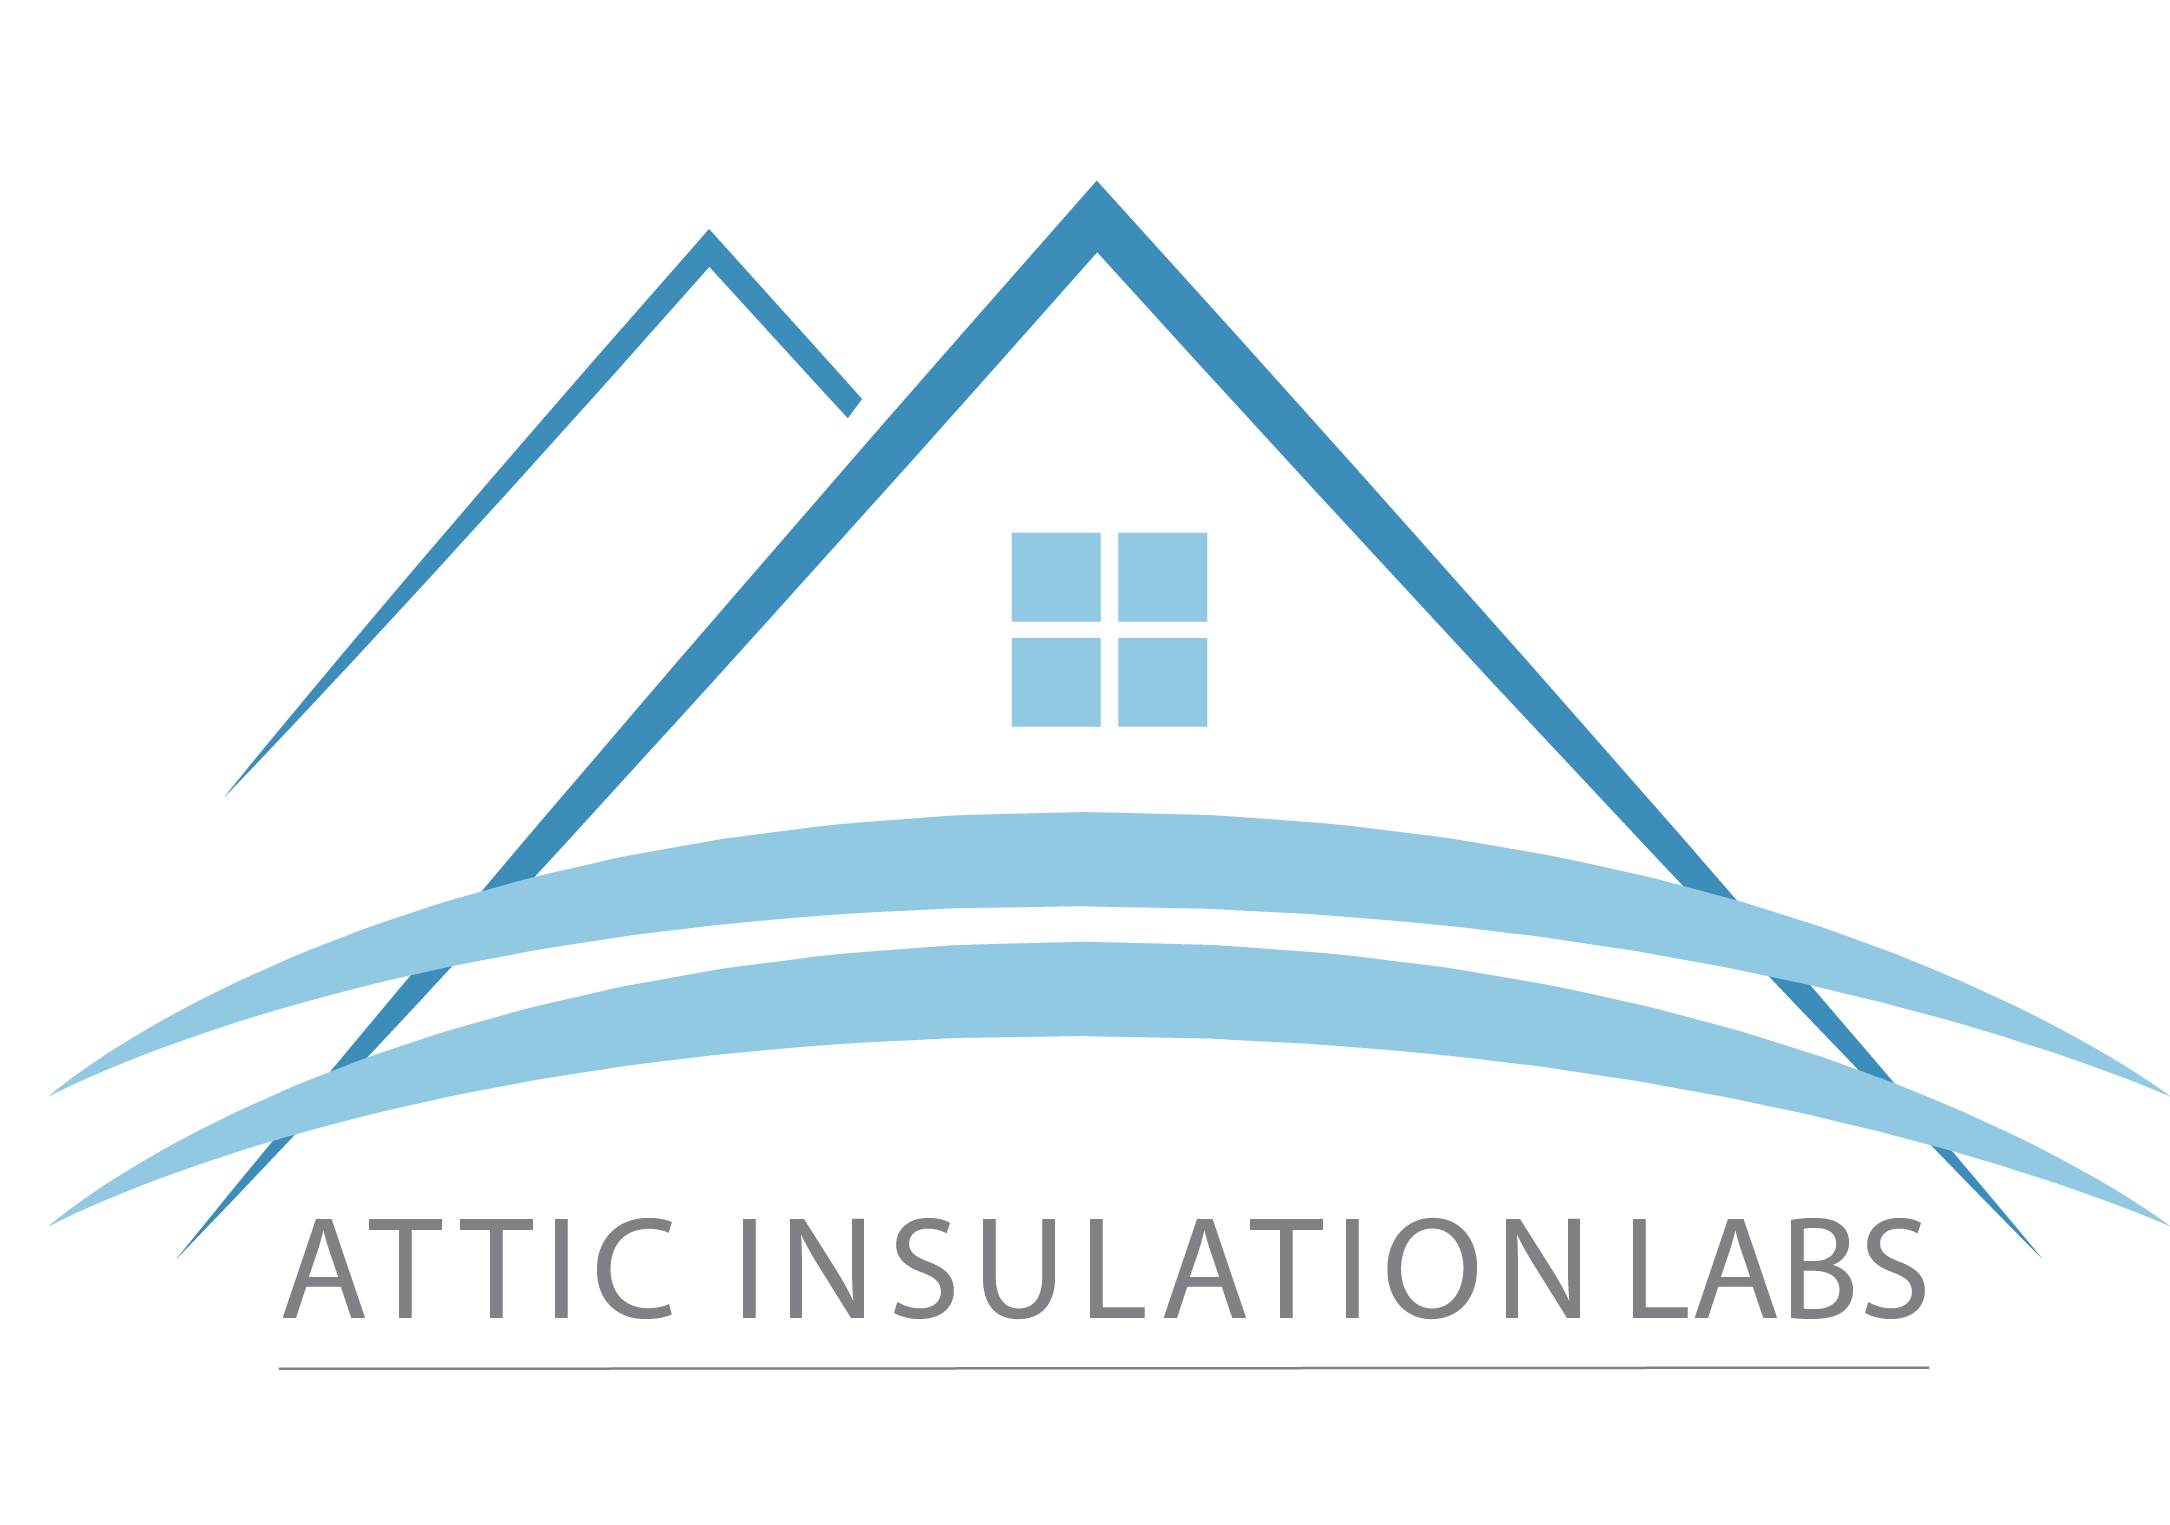 Attic Insulation LABS